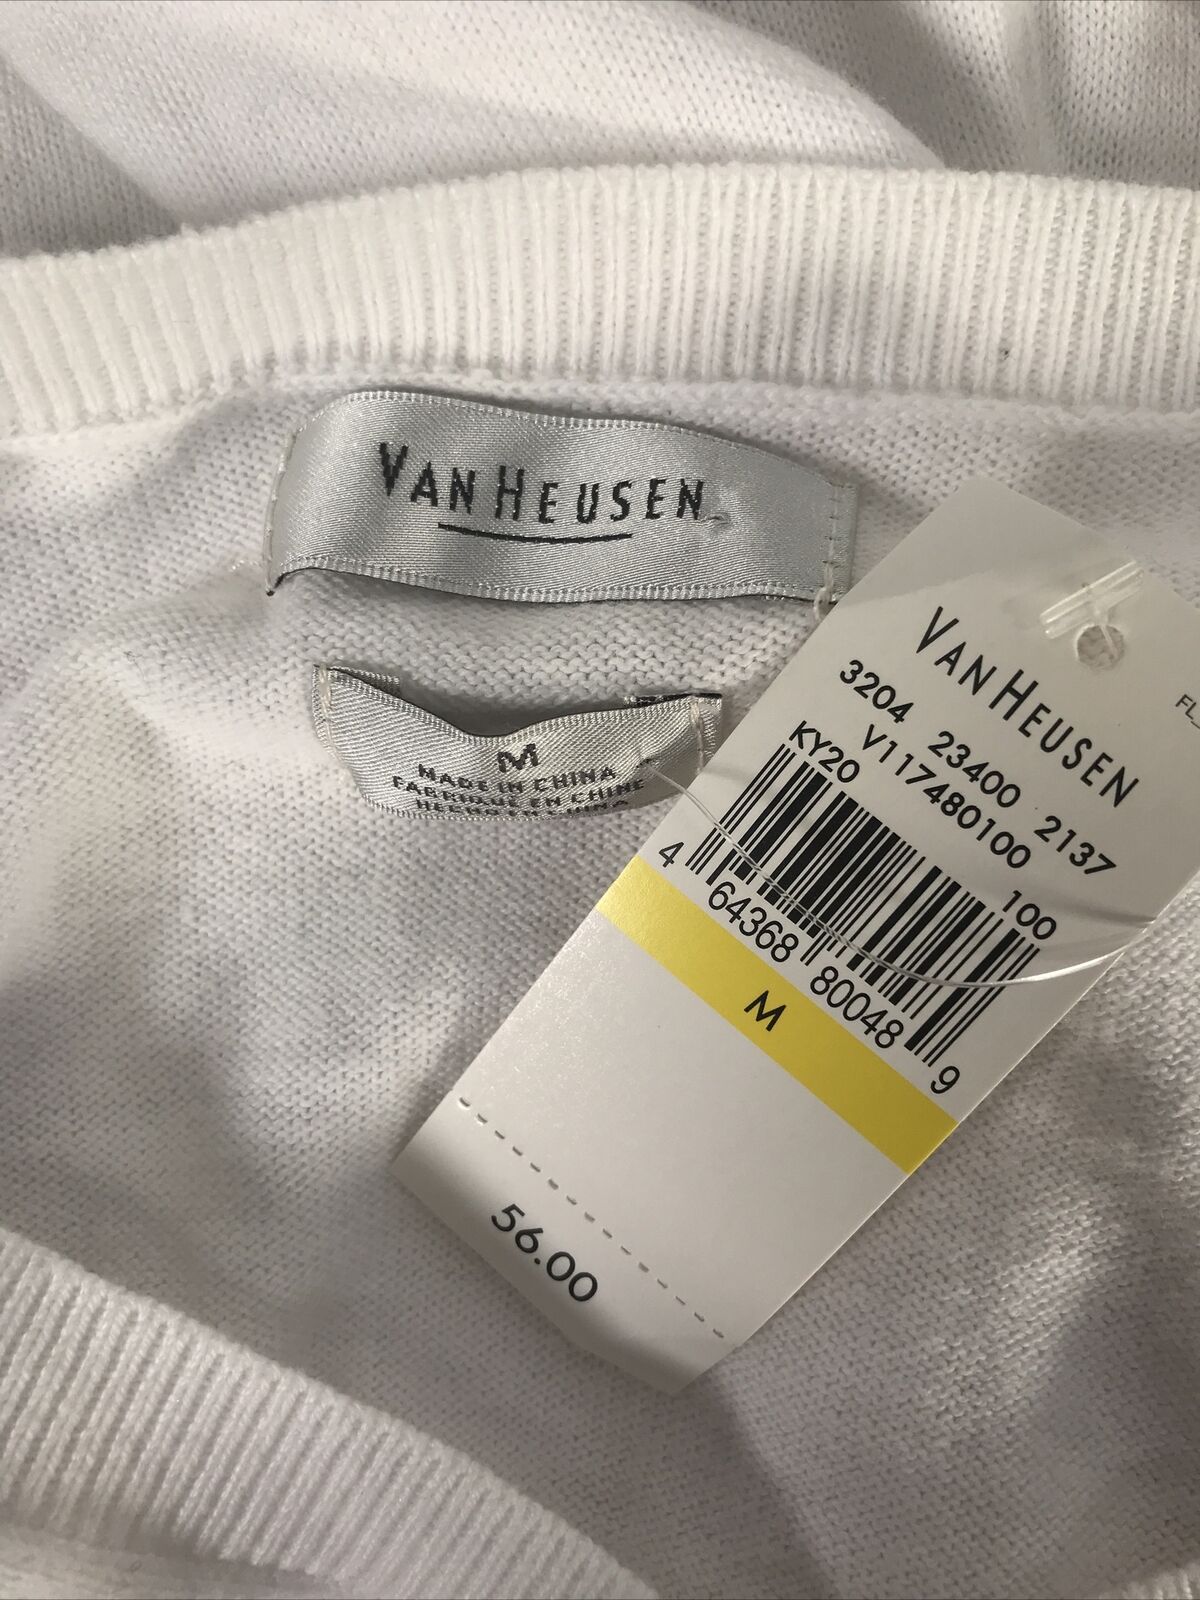 NEW Van Heusen Women's White Thin Knit Long Sleeve V-Neck Shirt Sz M